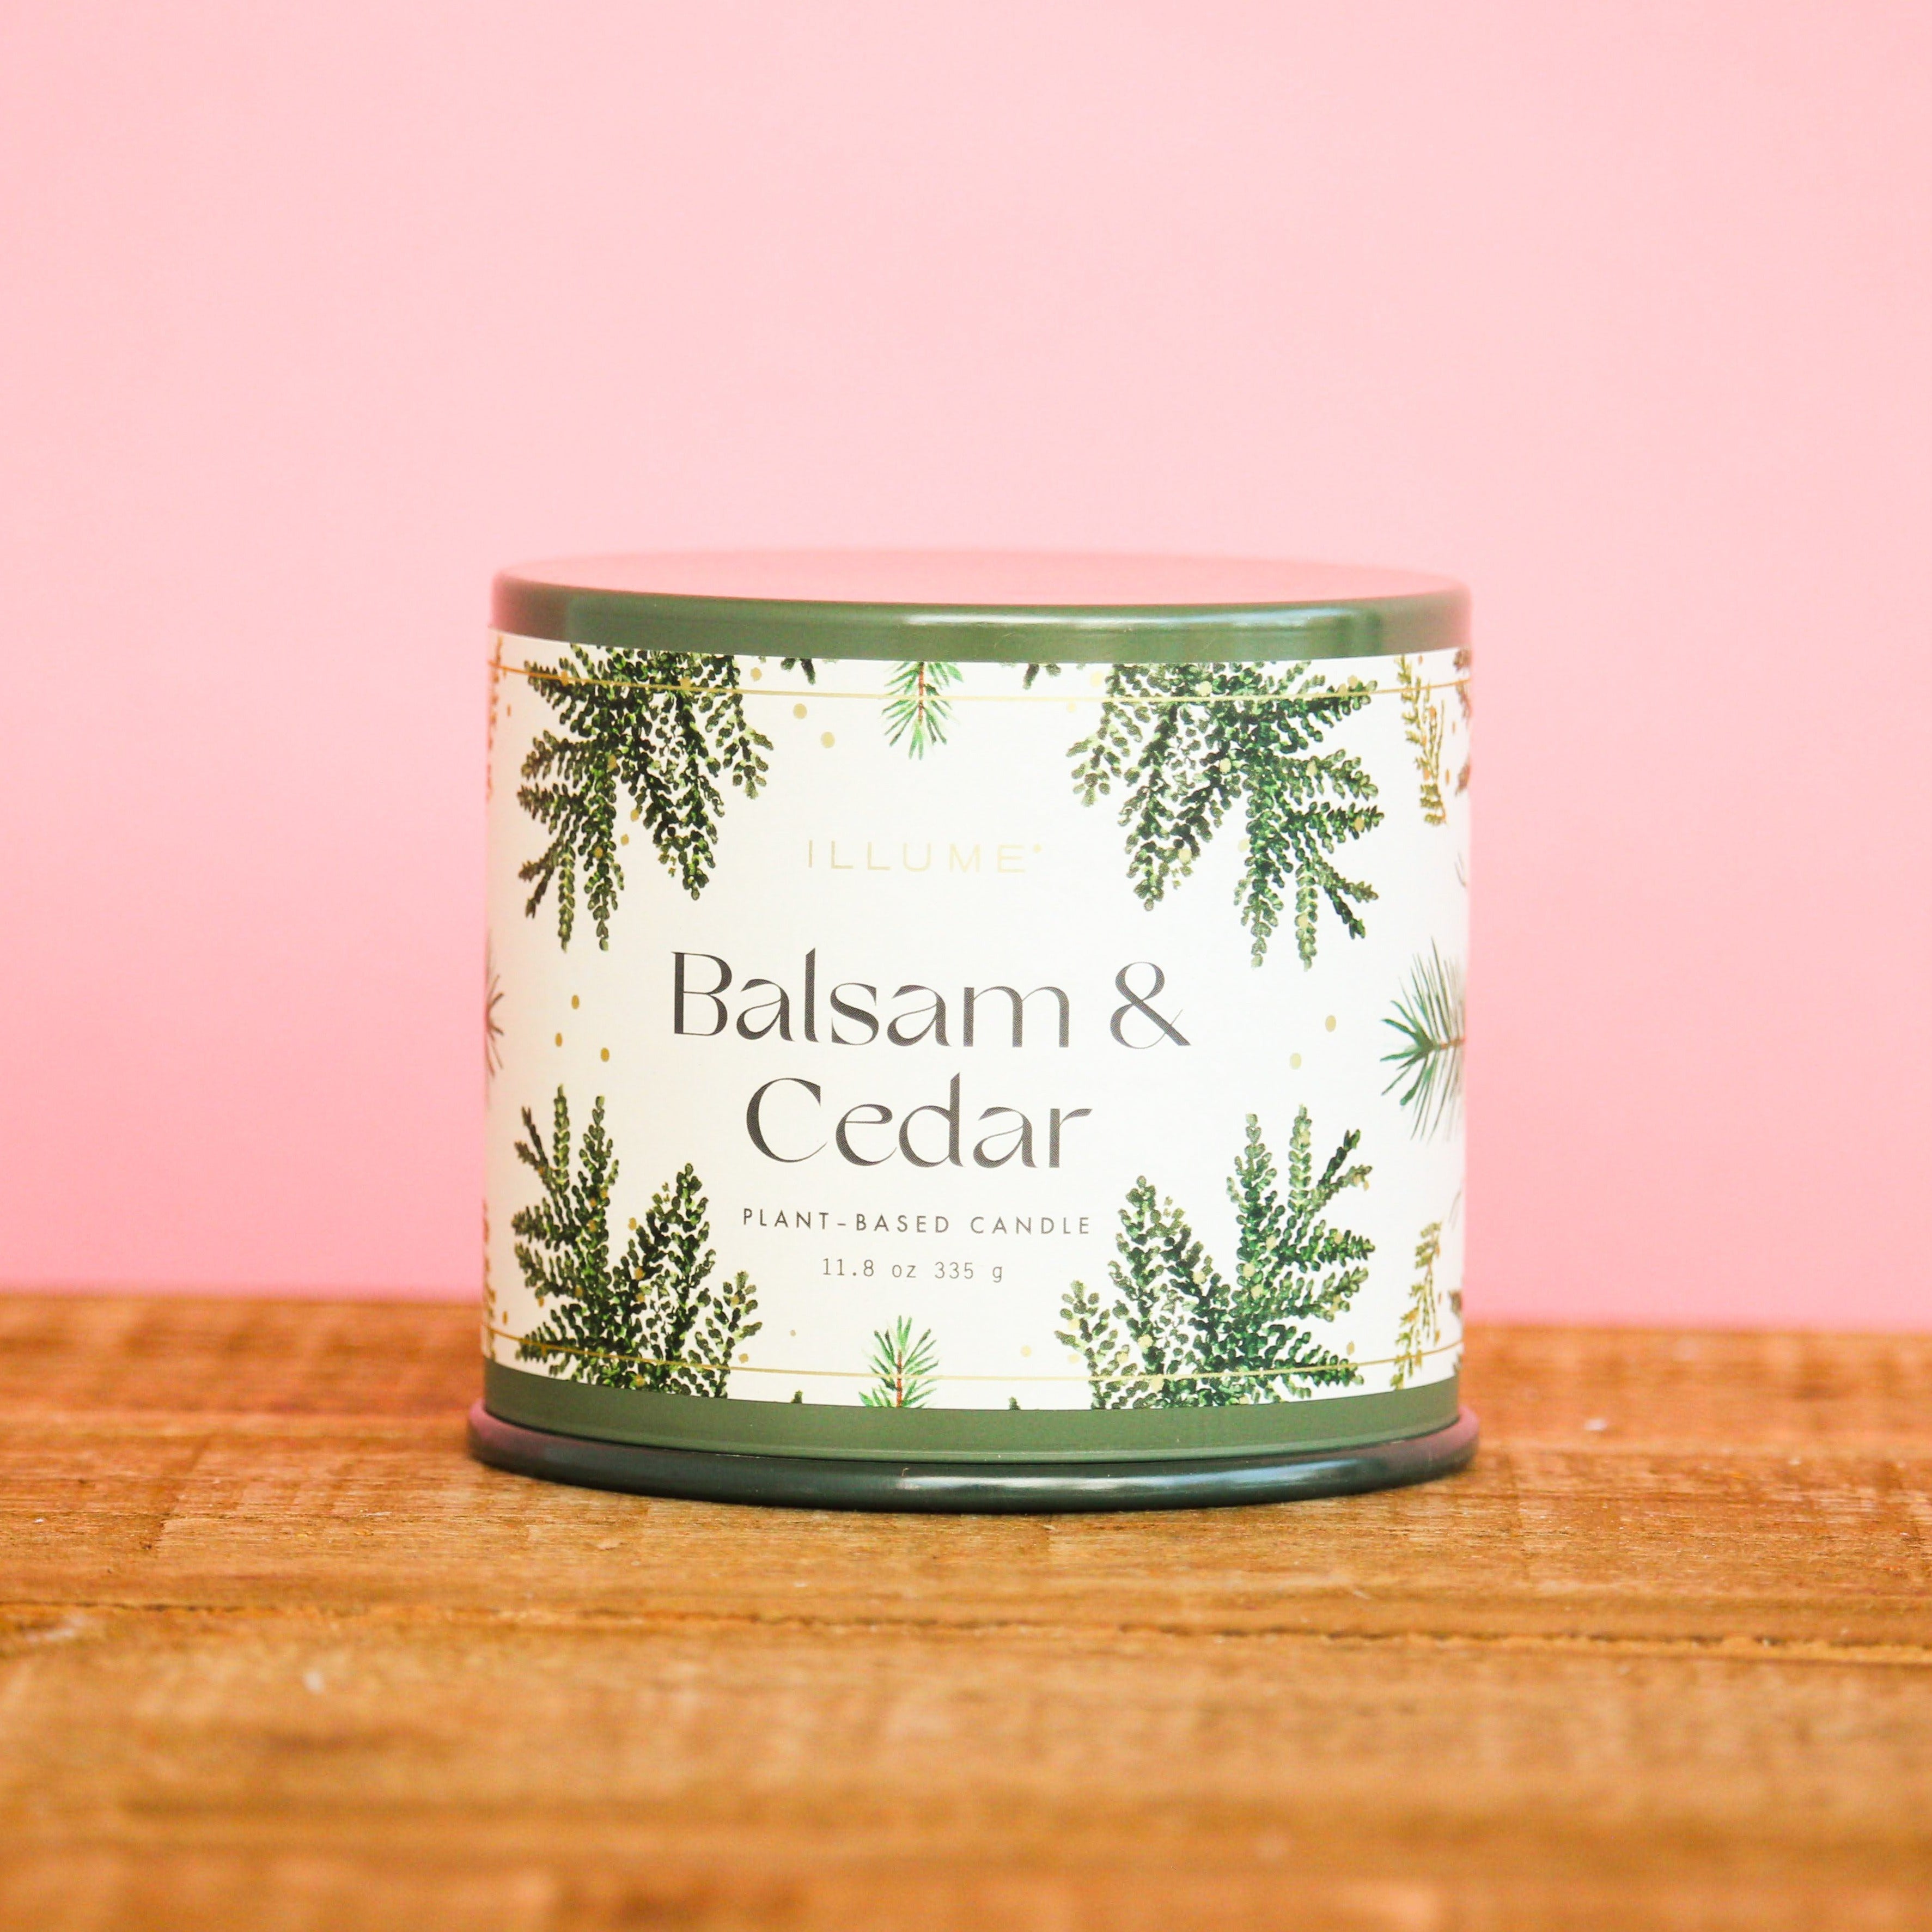 Illume Vanity Tin Candle Balsam Cedar